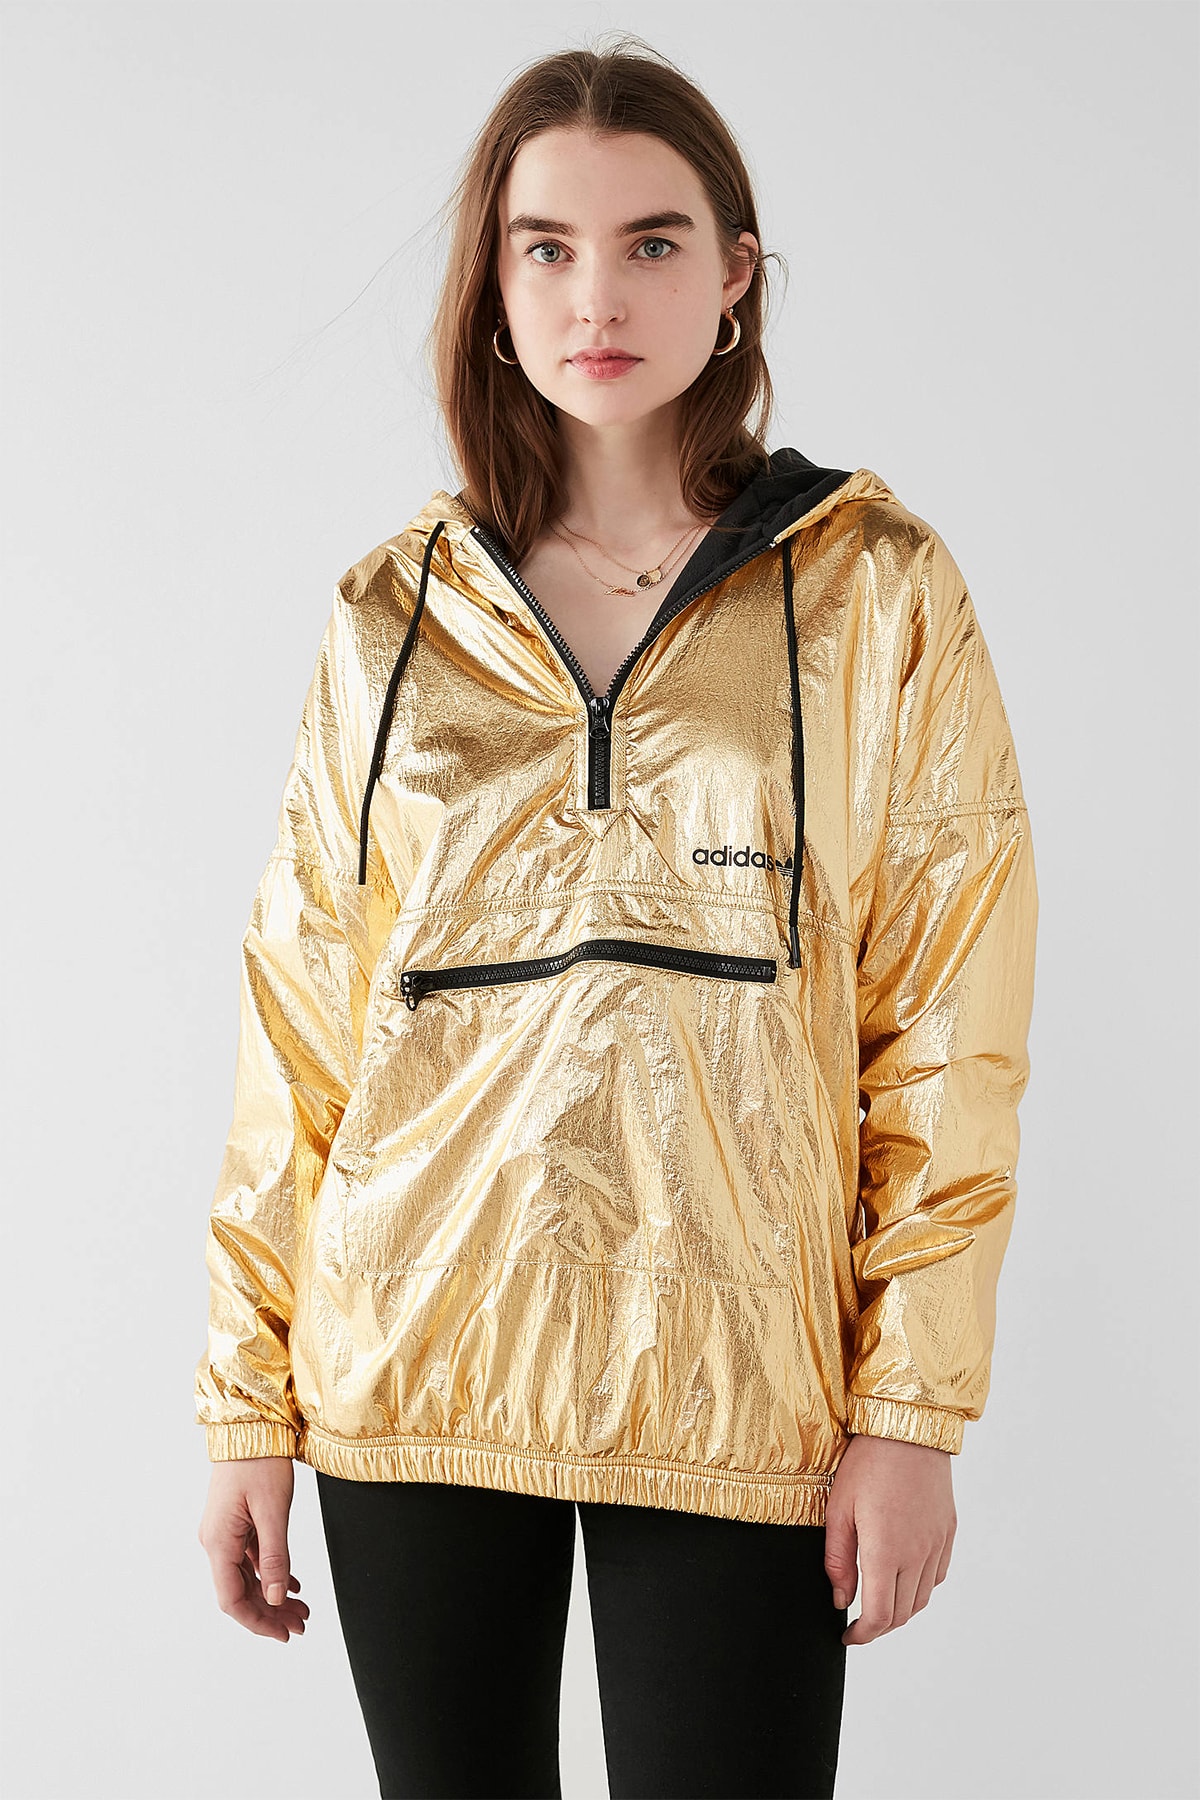 adidas originals metallic shiny gold golden windbreaker jacket urban outfitters